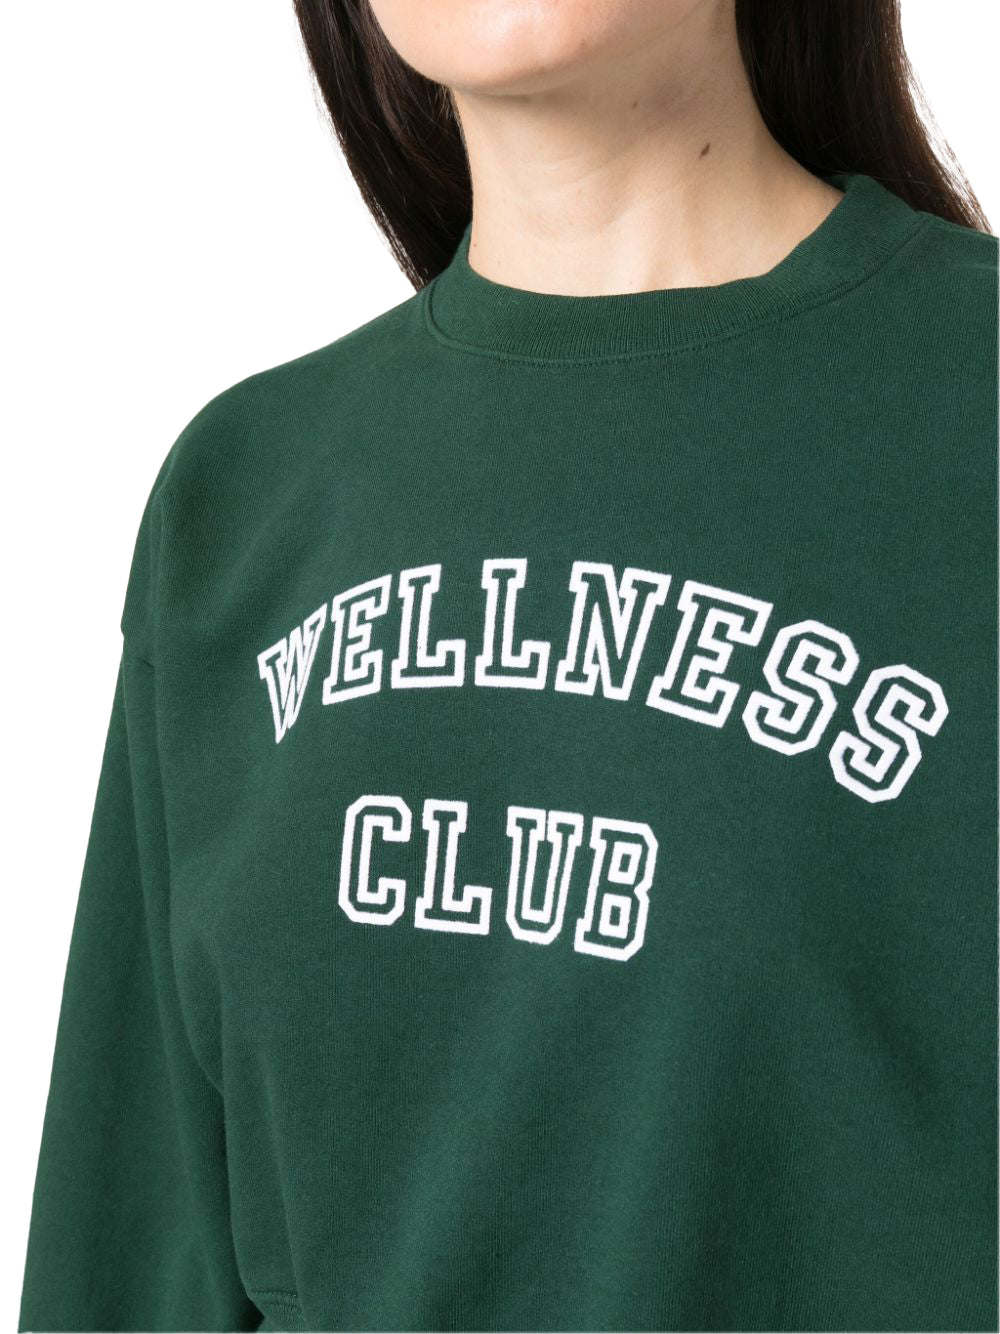 Wellness Club Green Sweatshirt